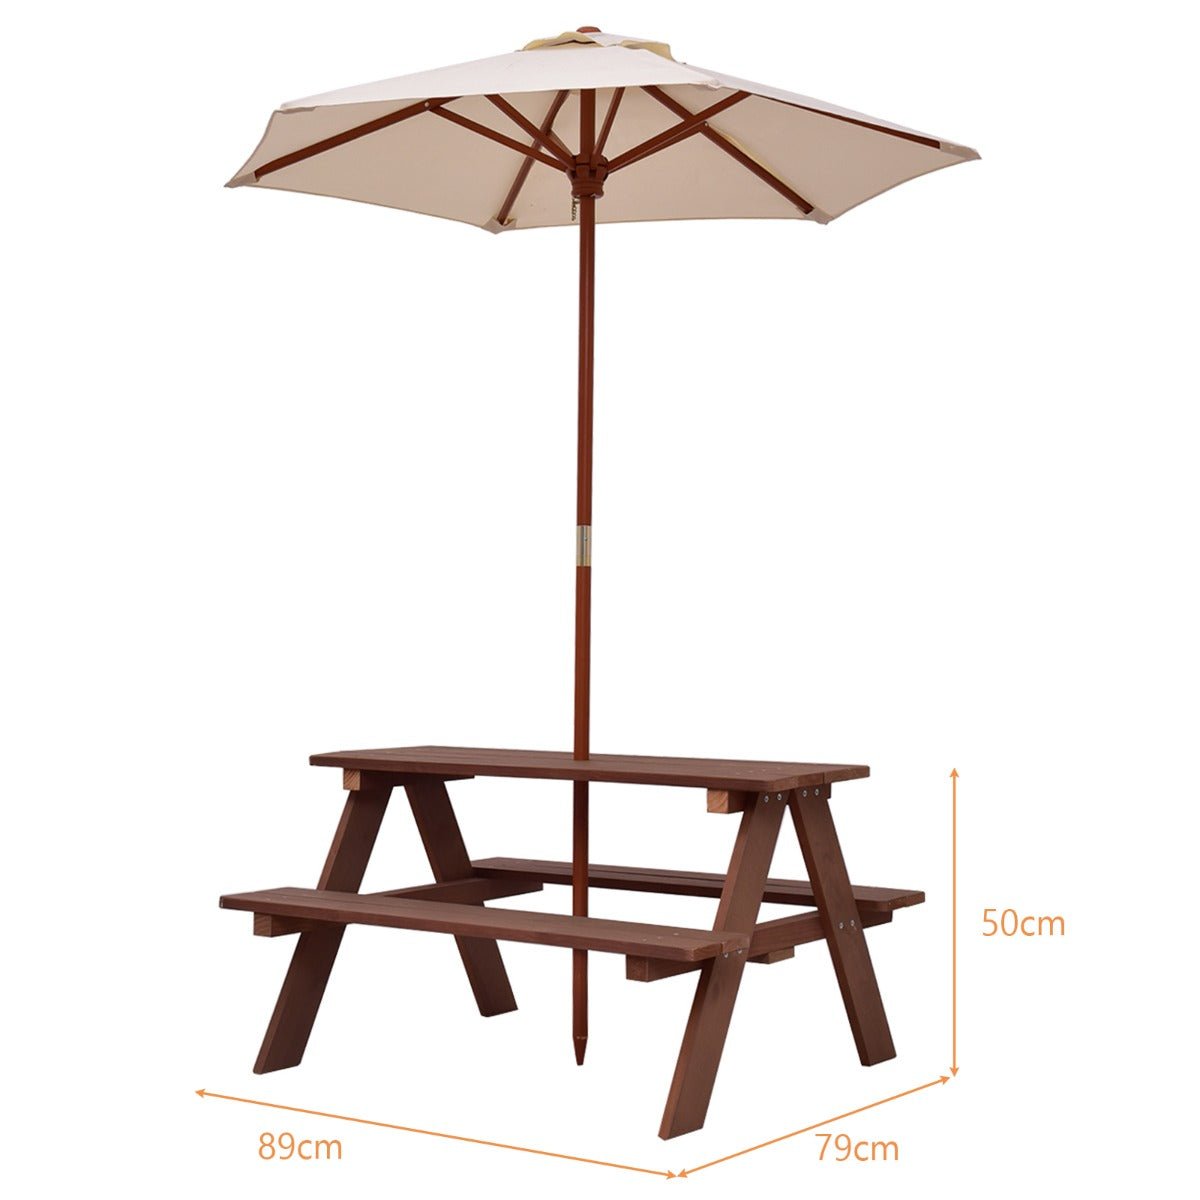 Children's Picnic Paradise: 3-in-1 Table, Bench & Umbrella for Joyful Times